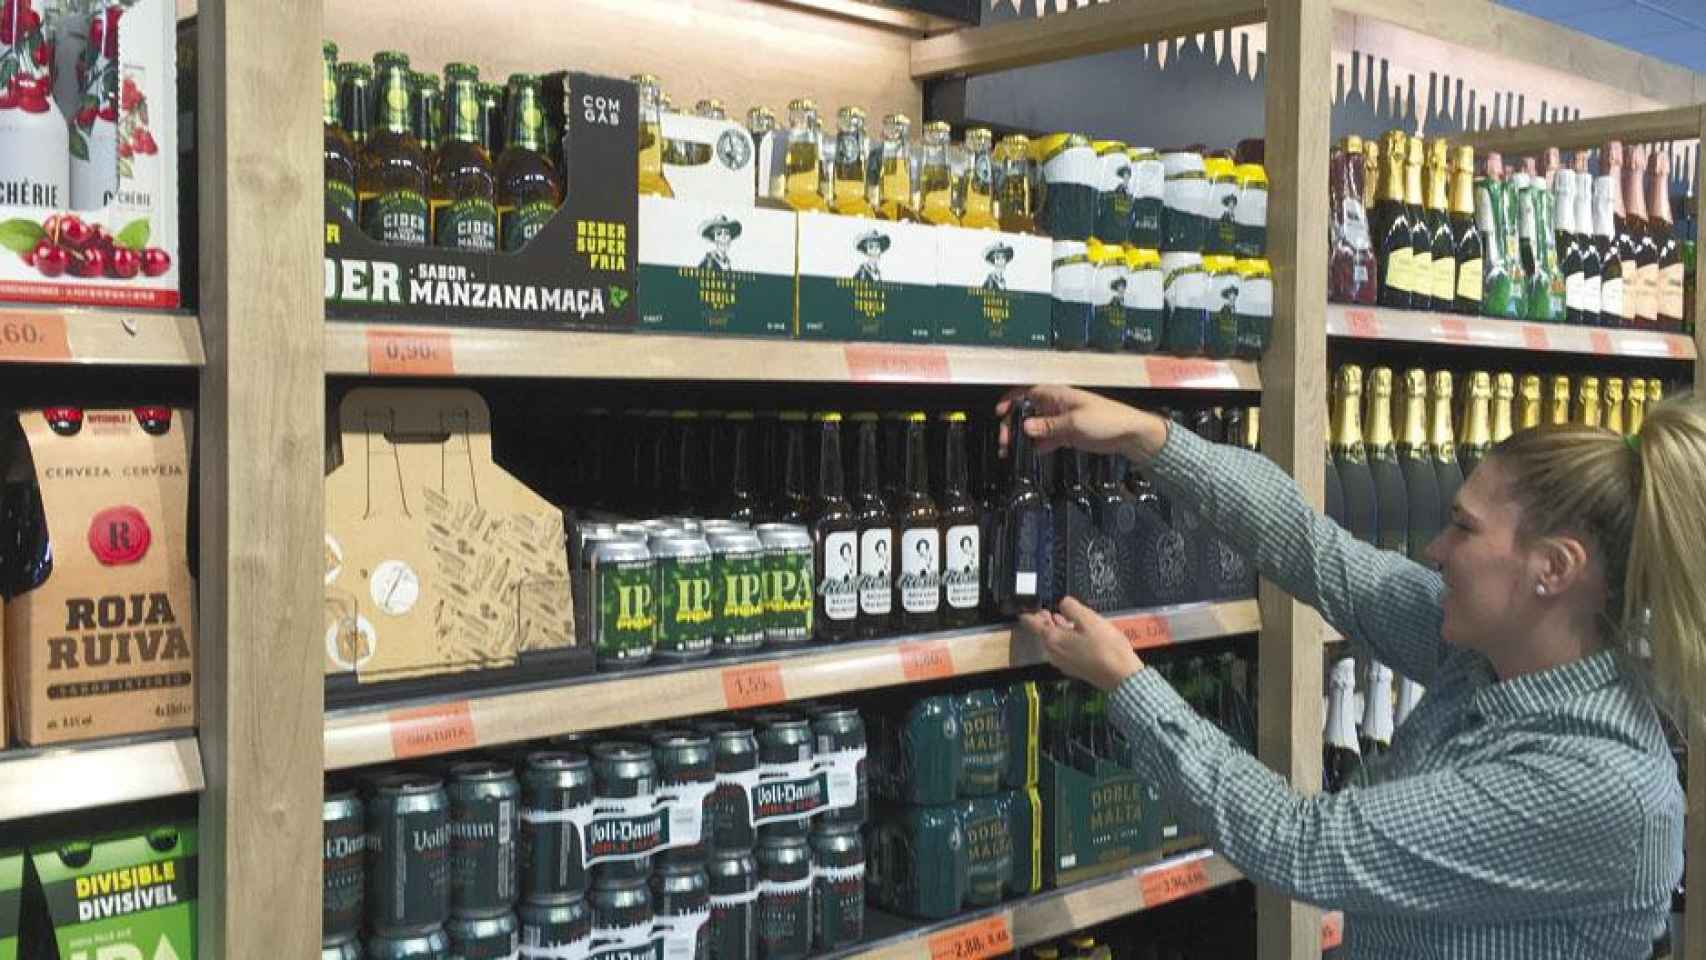 Imagen de un lineal de cervezas en un supermercado del grupo Mercadona / MERCADONA